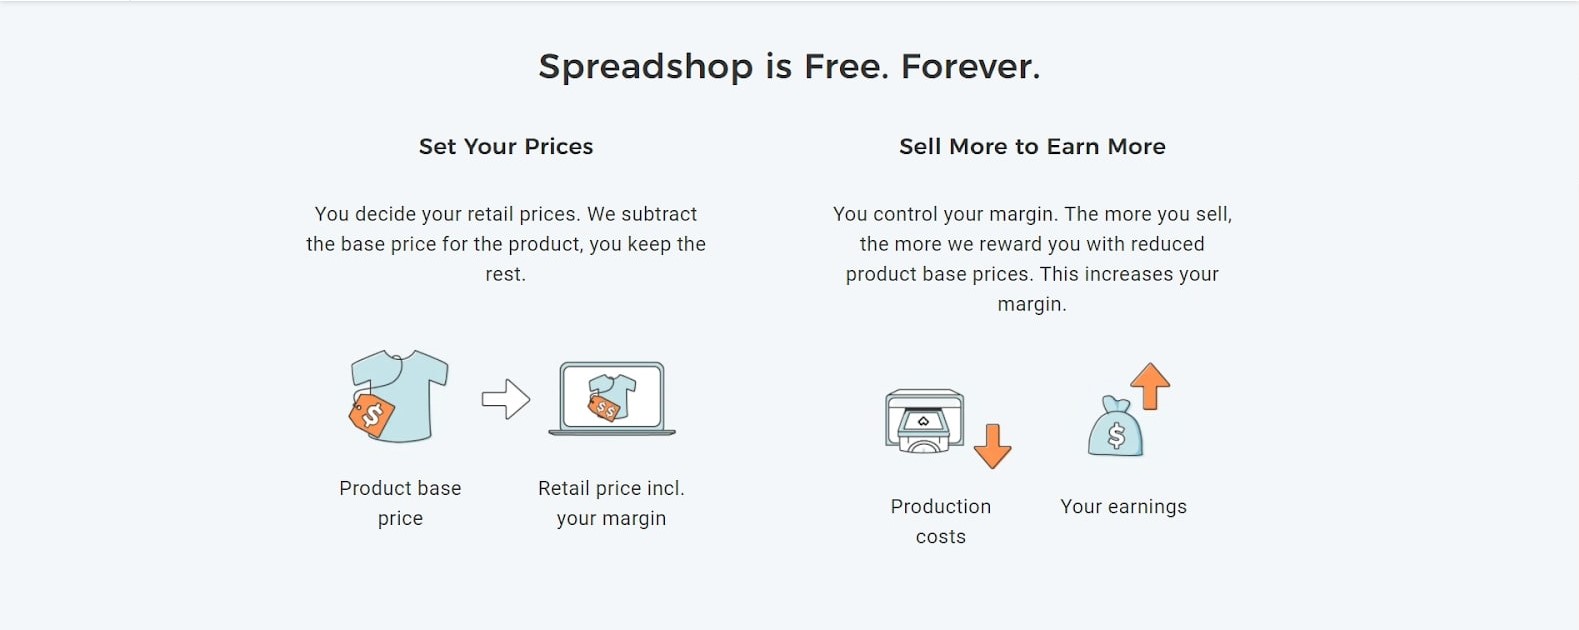 How prices work on Spreadshop